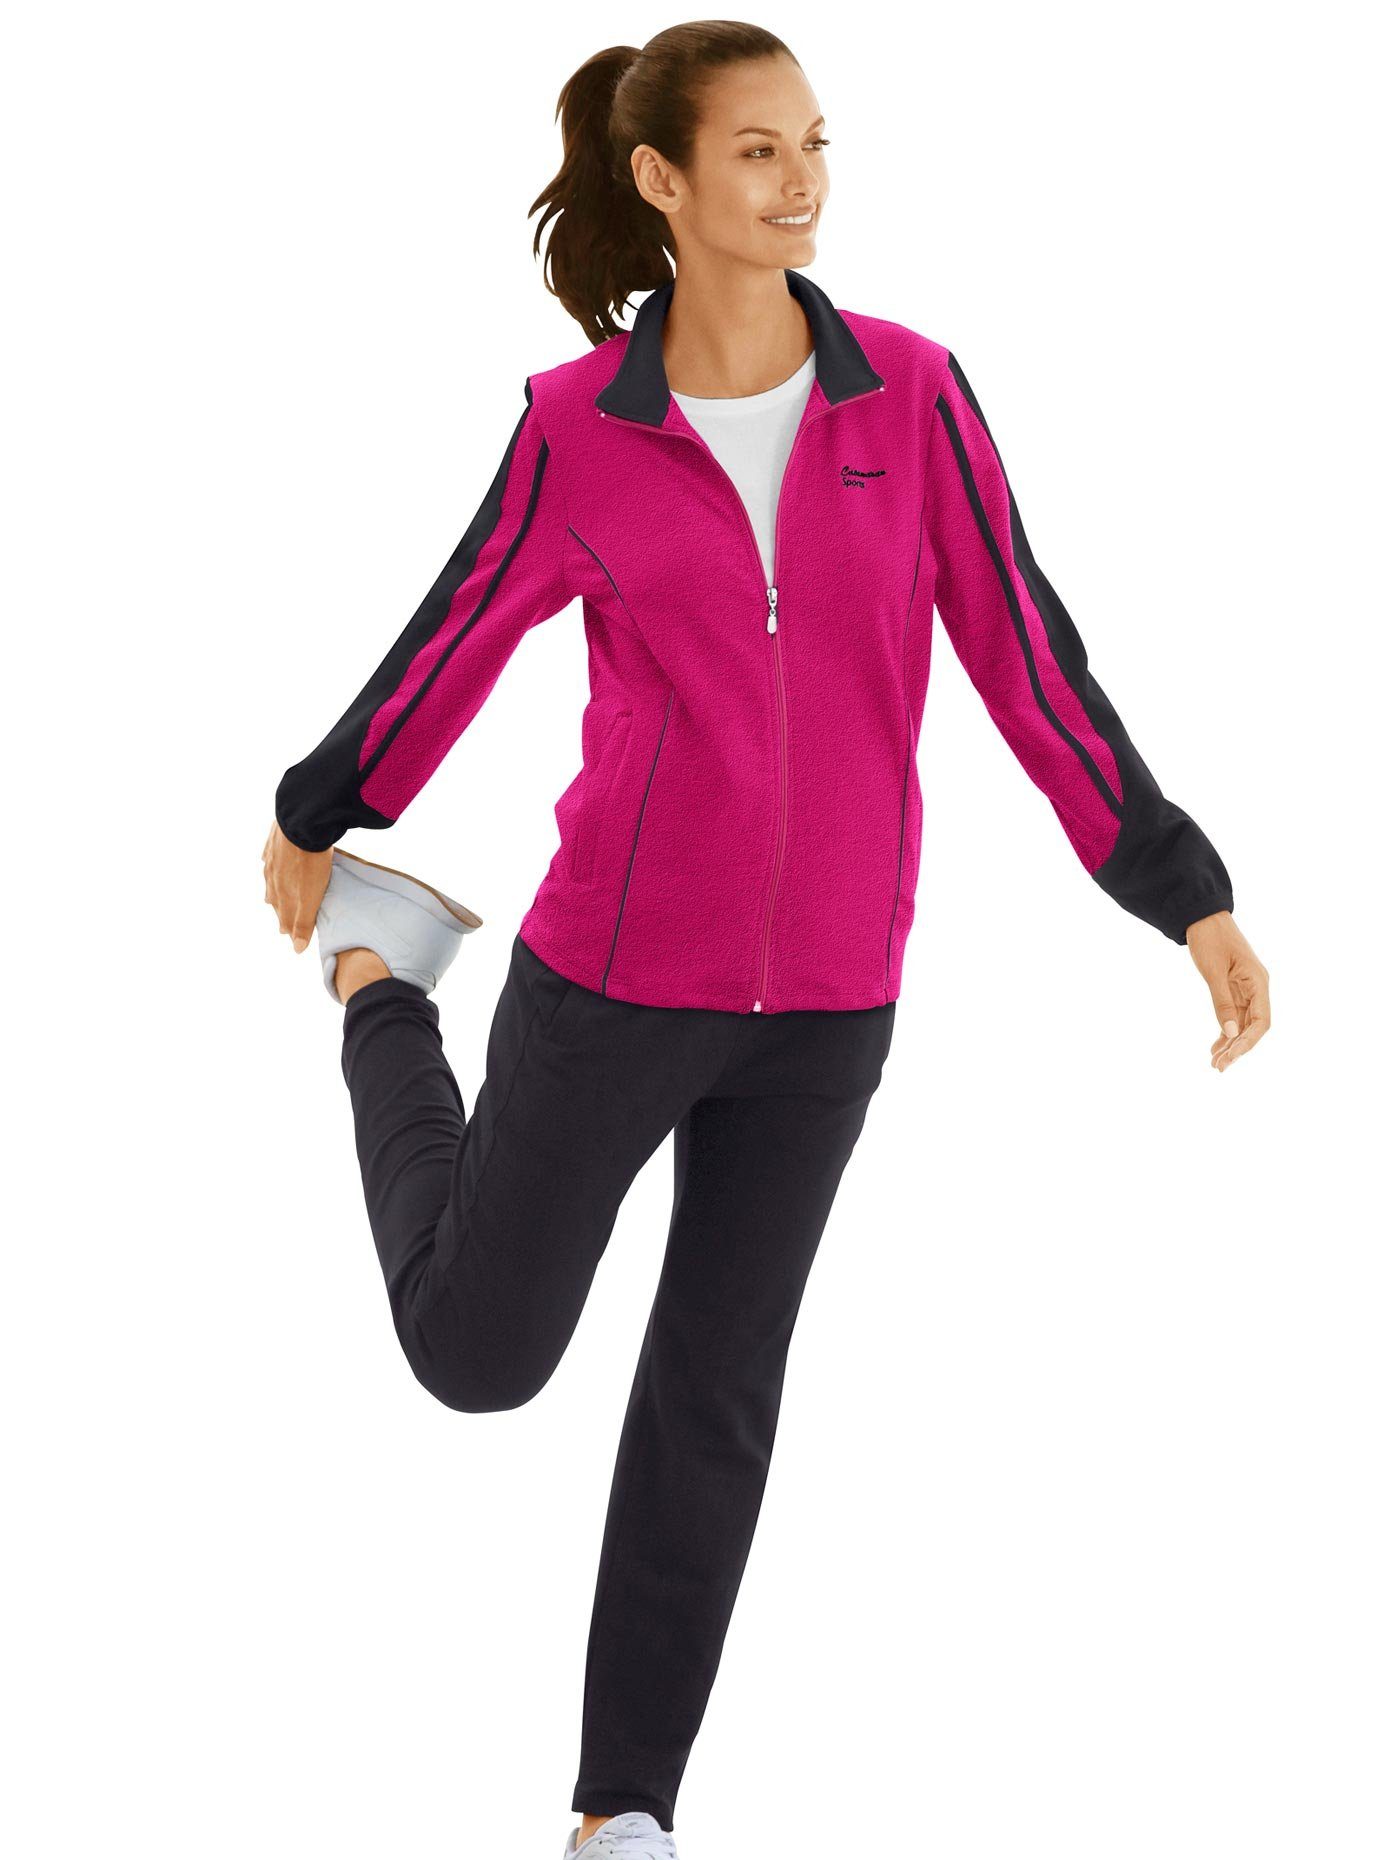 Damen Trainingsanzüge kaufen » Damen Jogginganzüge | OTTO